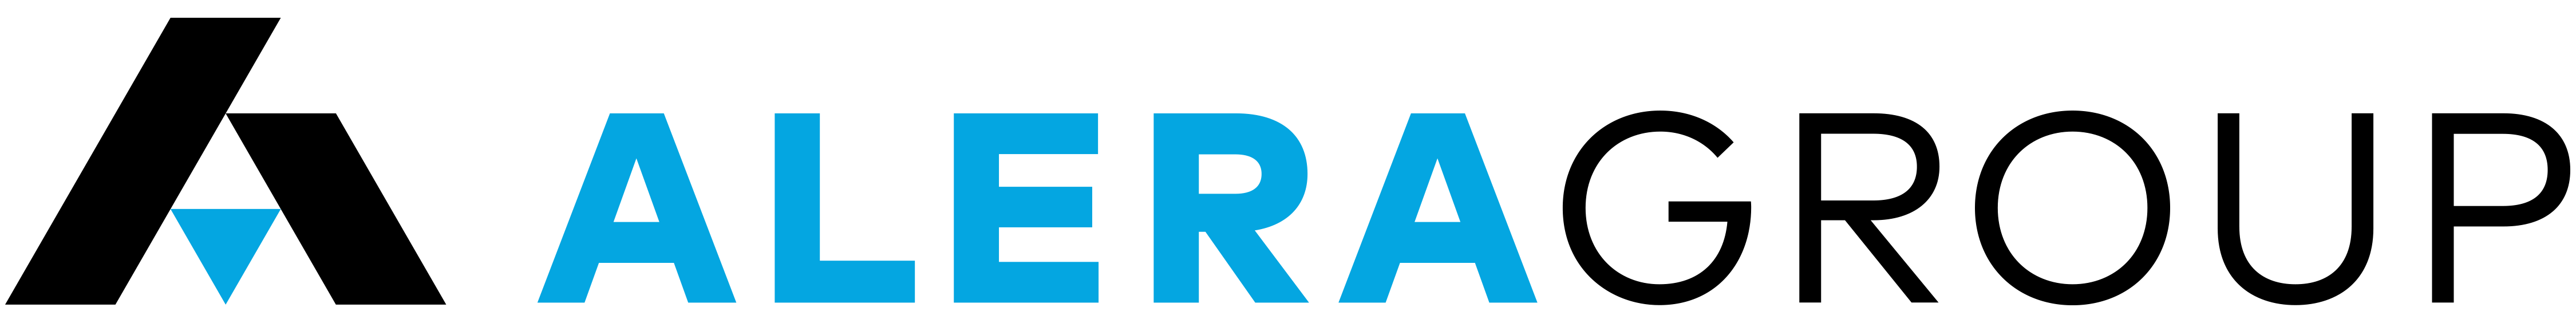 Alera group logo